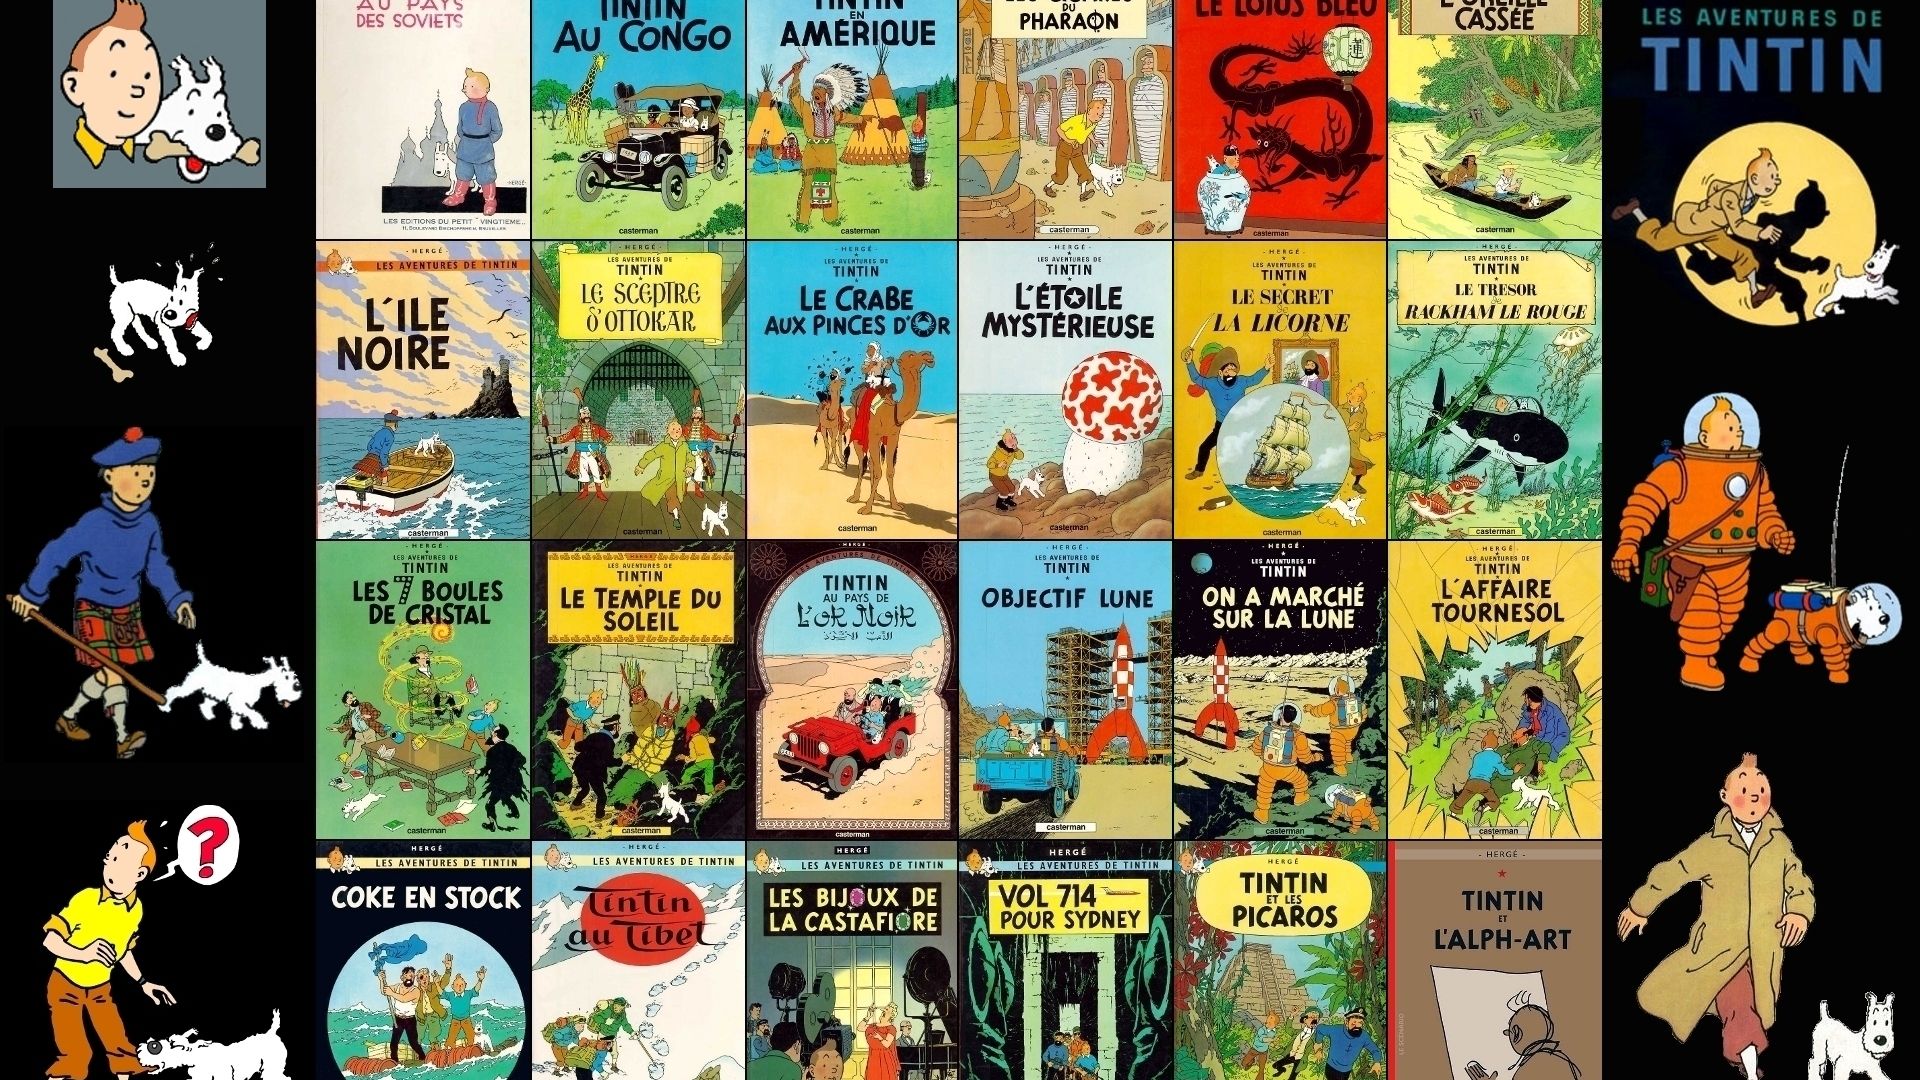 The Tdventures of Tintin-11 1920x1080 Wallpapers, 1920x1080 ...